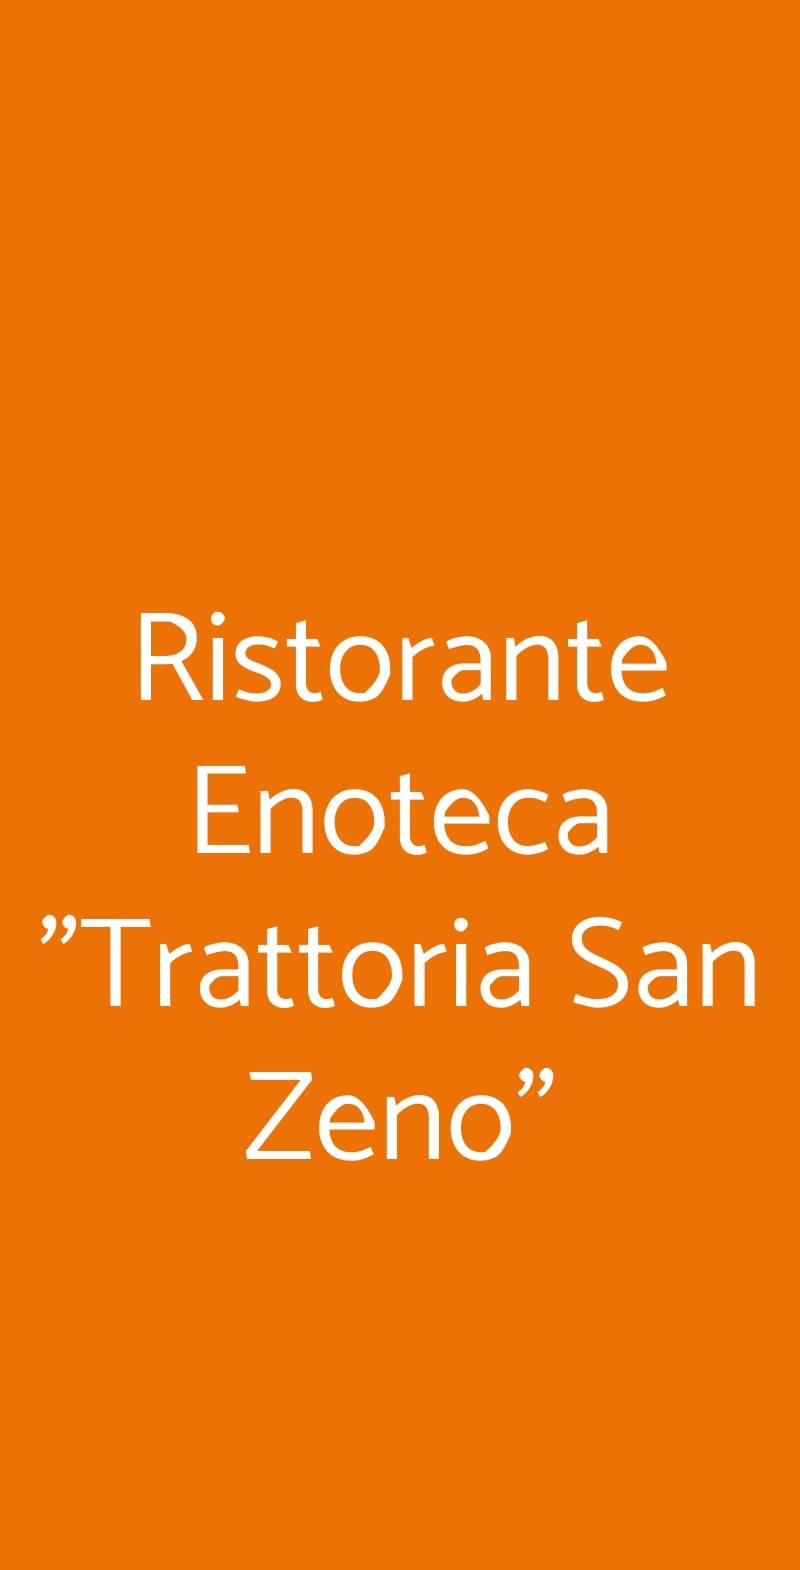 Ristorante Enoteca "Trattoria San Zeno" Montagnana menù 1 pagina